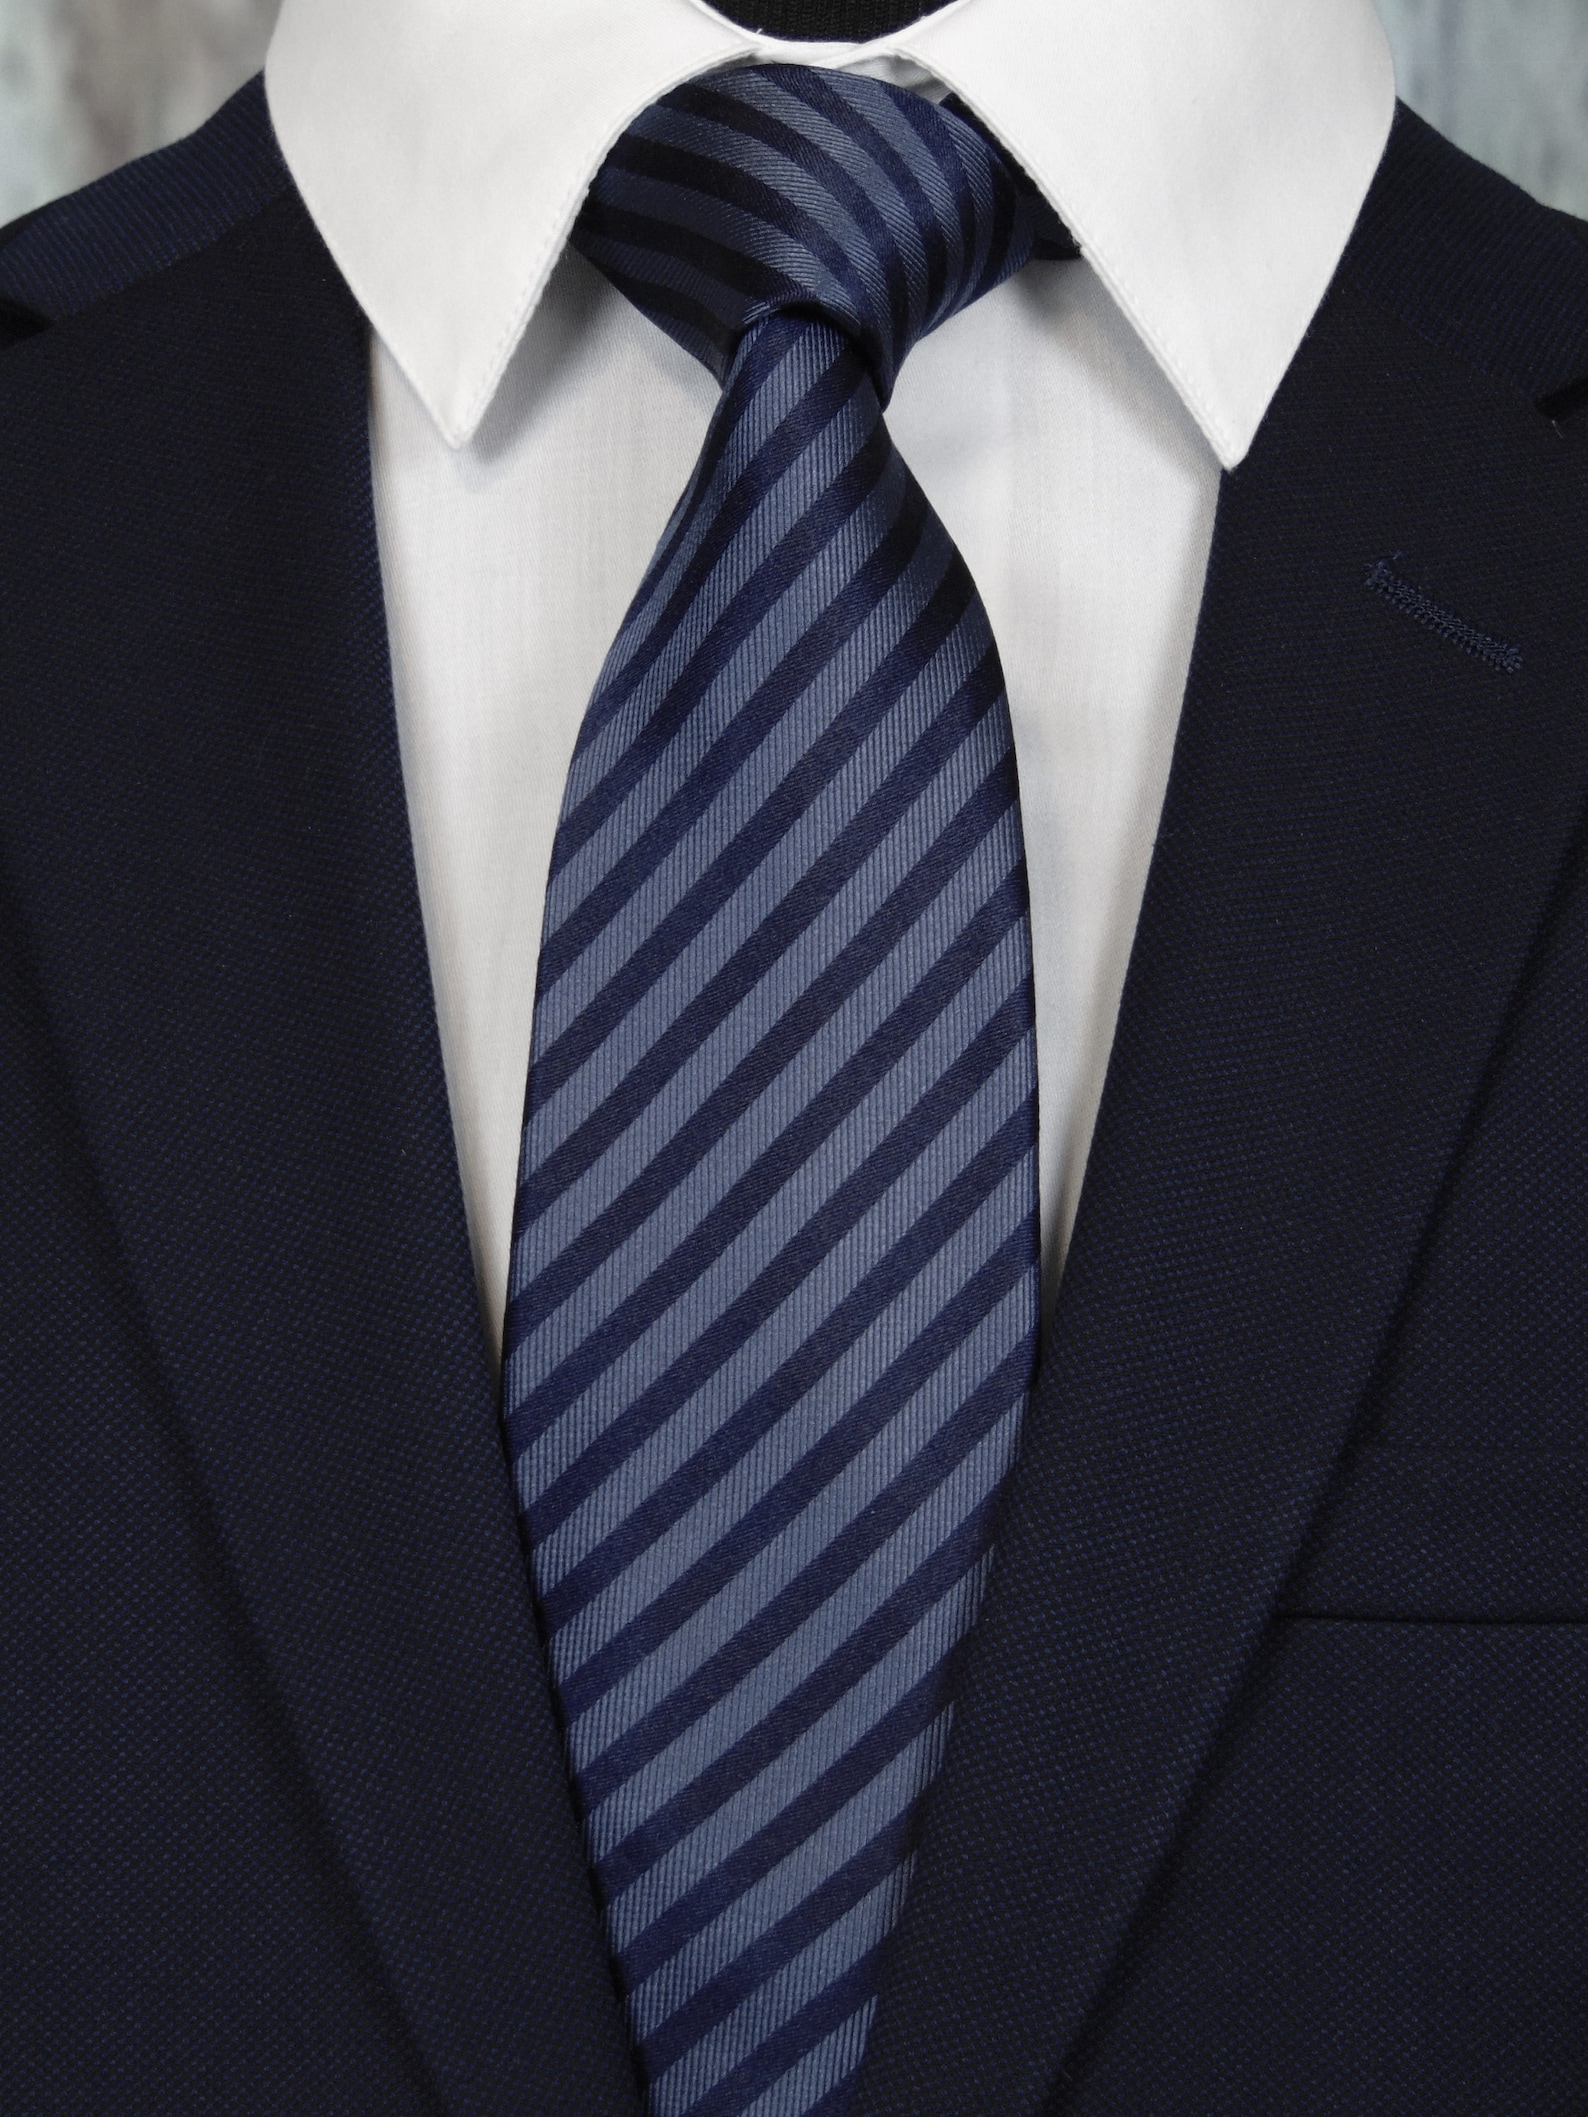 Striped Tie Mens Navy and Blue Silk Striped Necktie. | Etsy